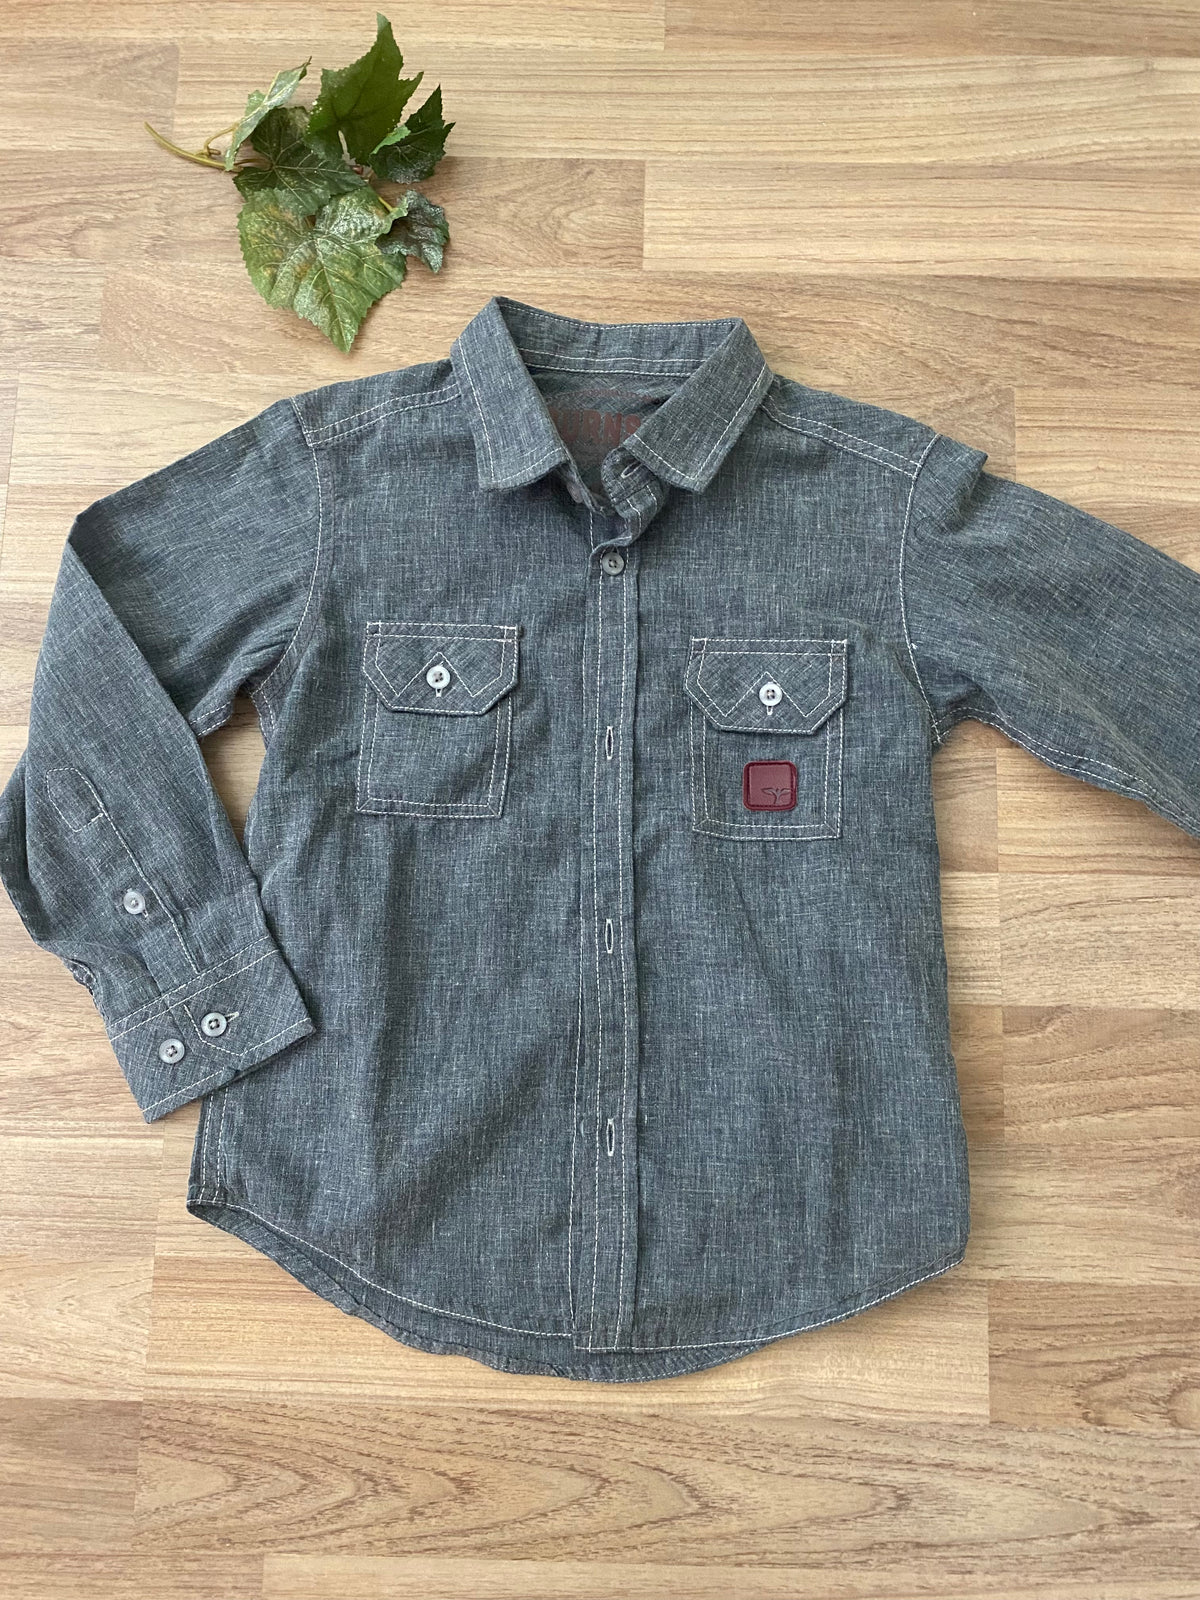 Full Button Up Shirt (Boys Size 6)